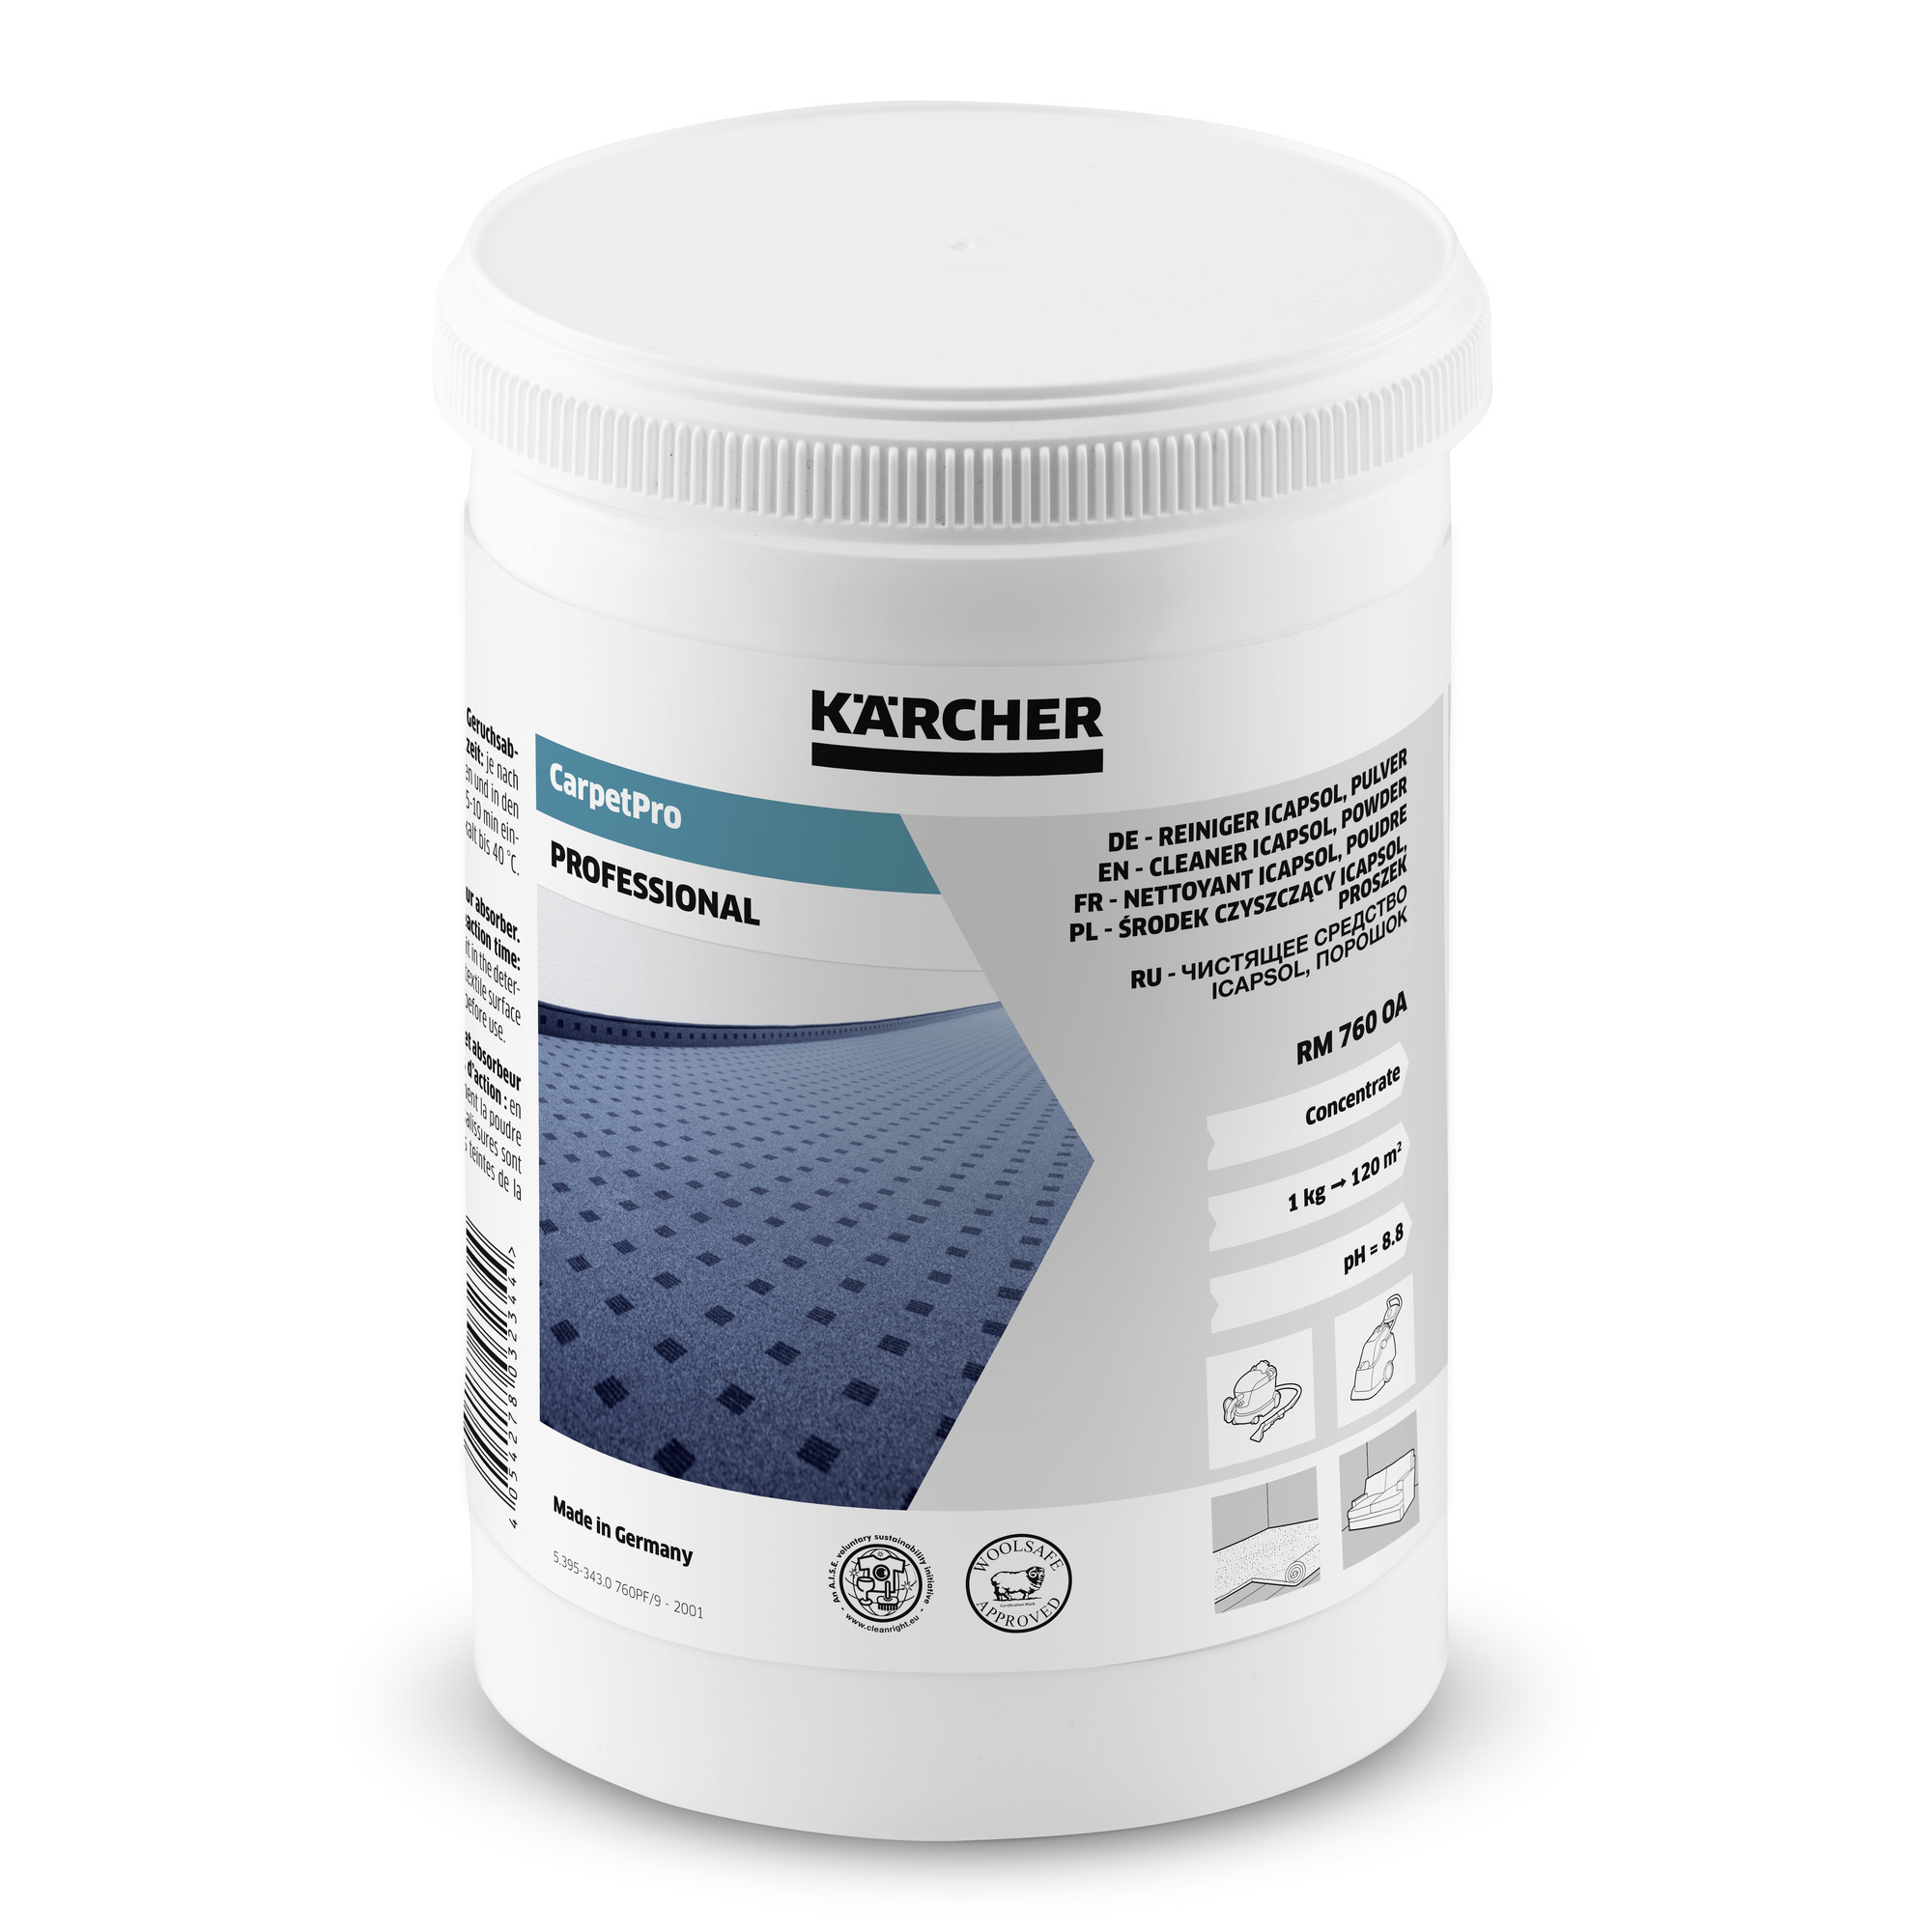 Kaercher CarpetPro Cleaner iCapsol RM 760 Powder OA